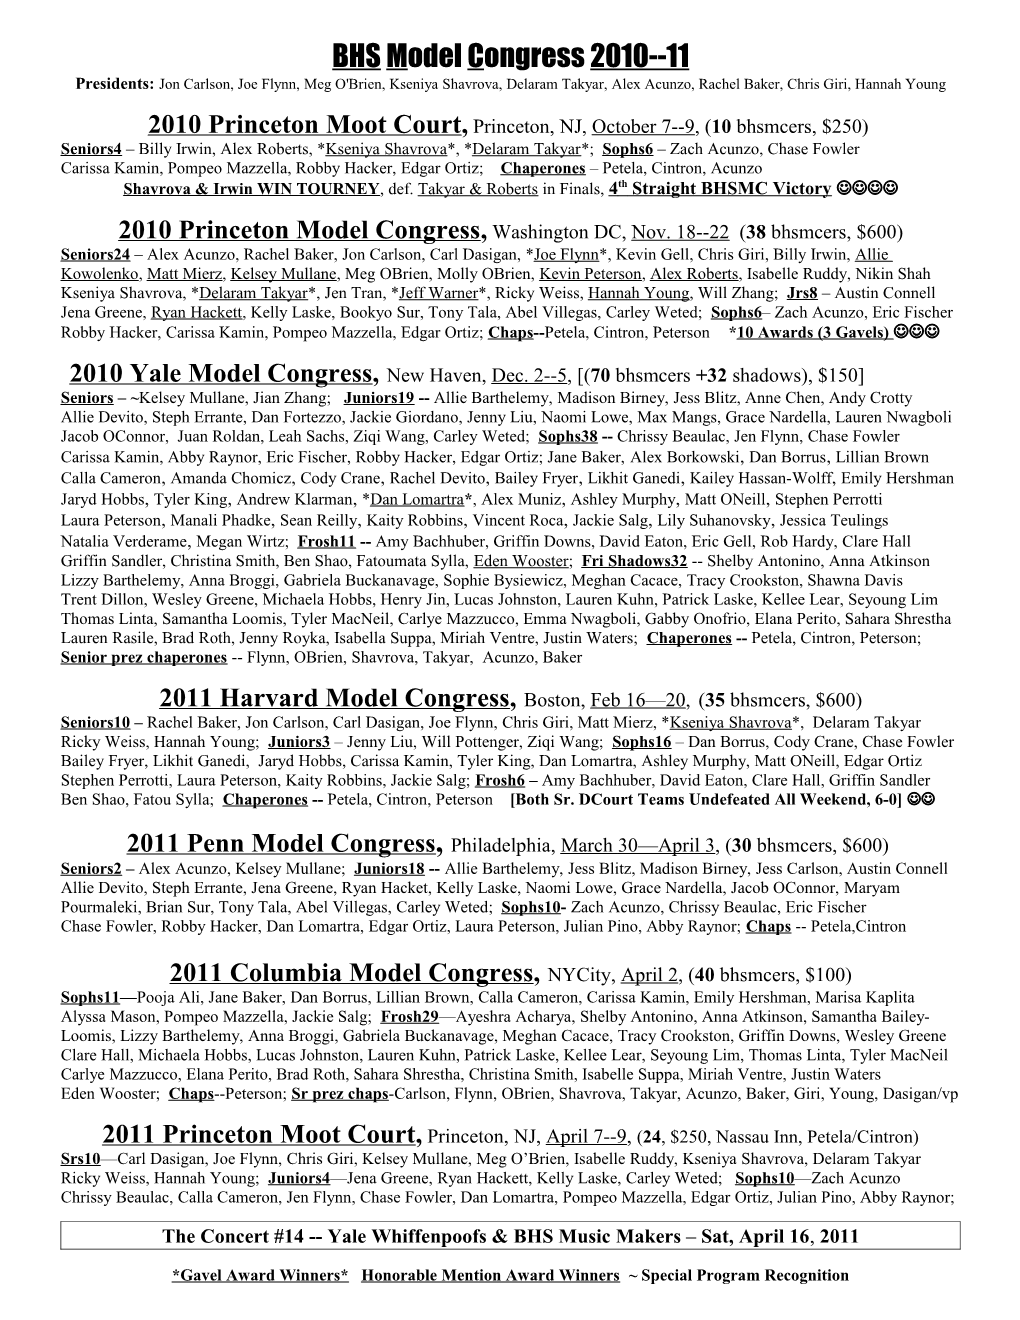 BHS Model Congress 2003-4